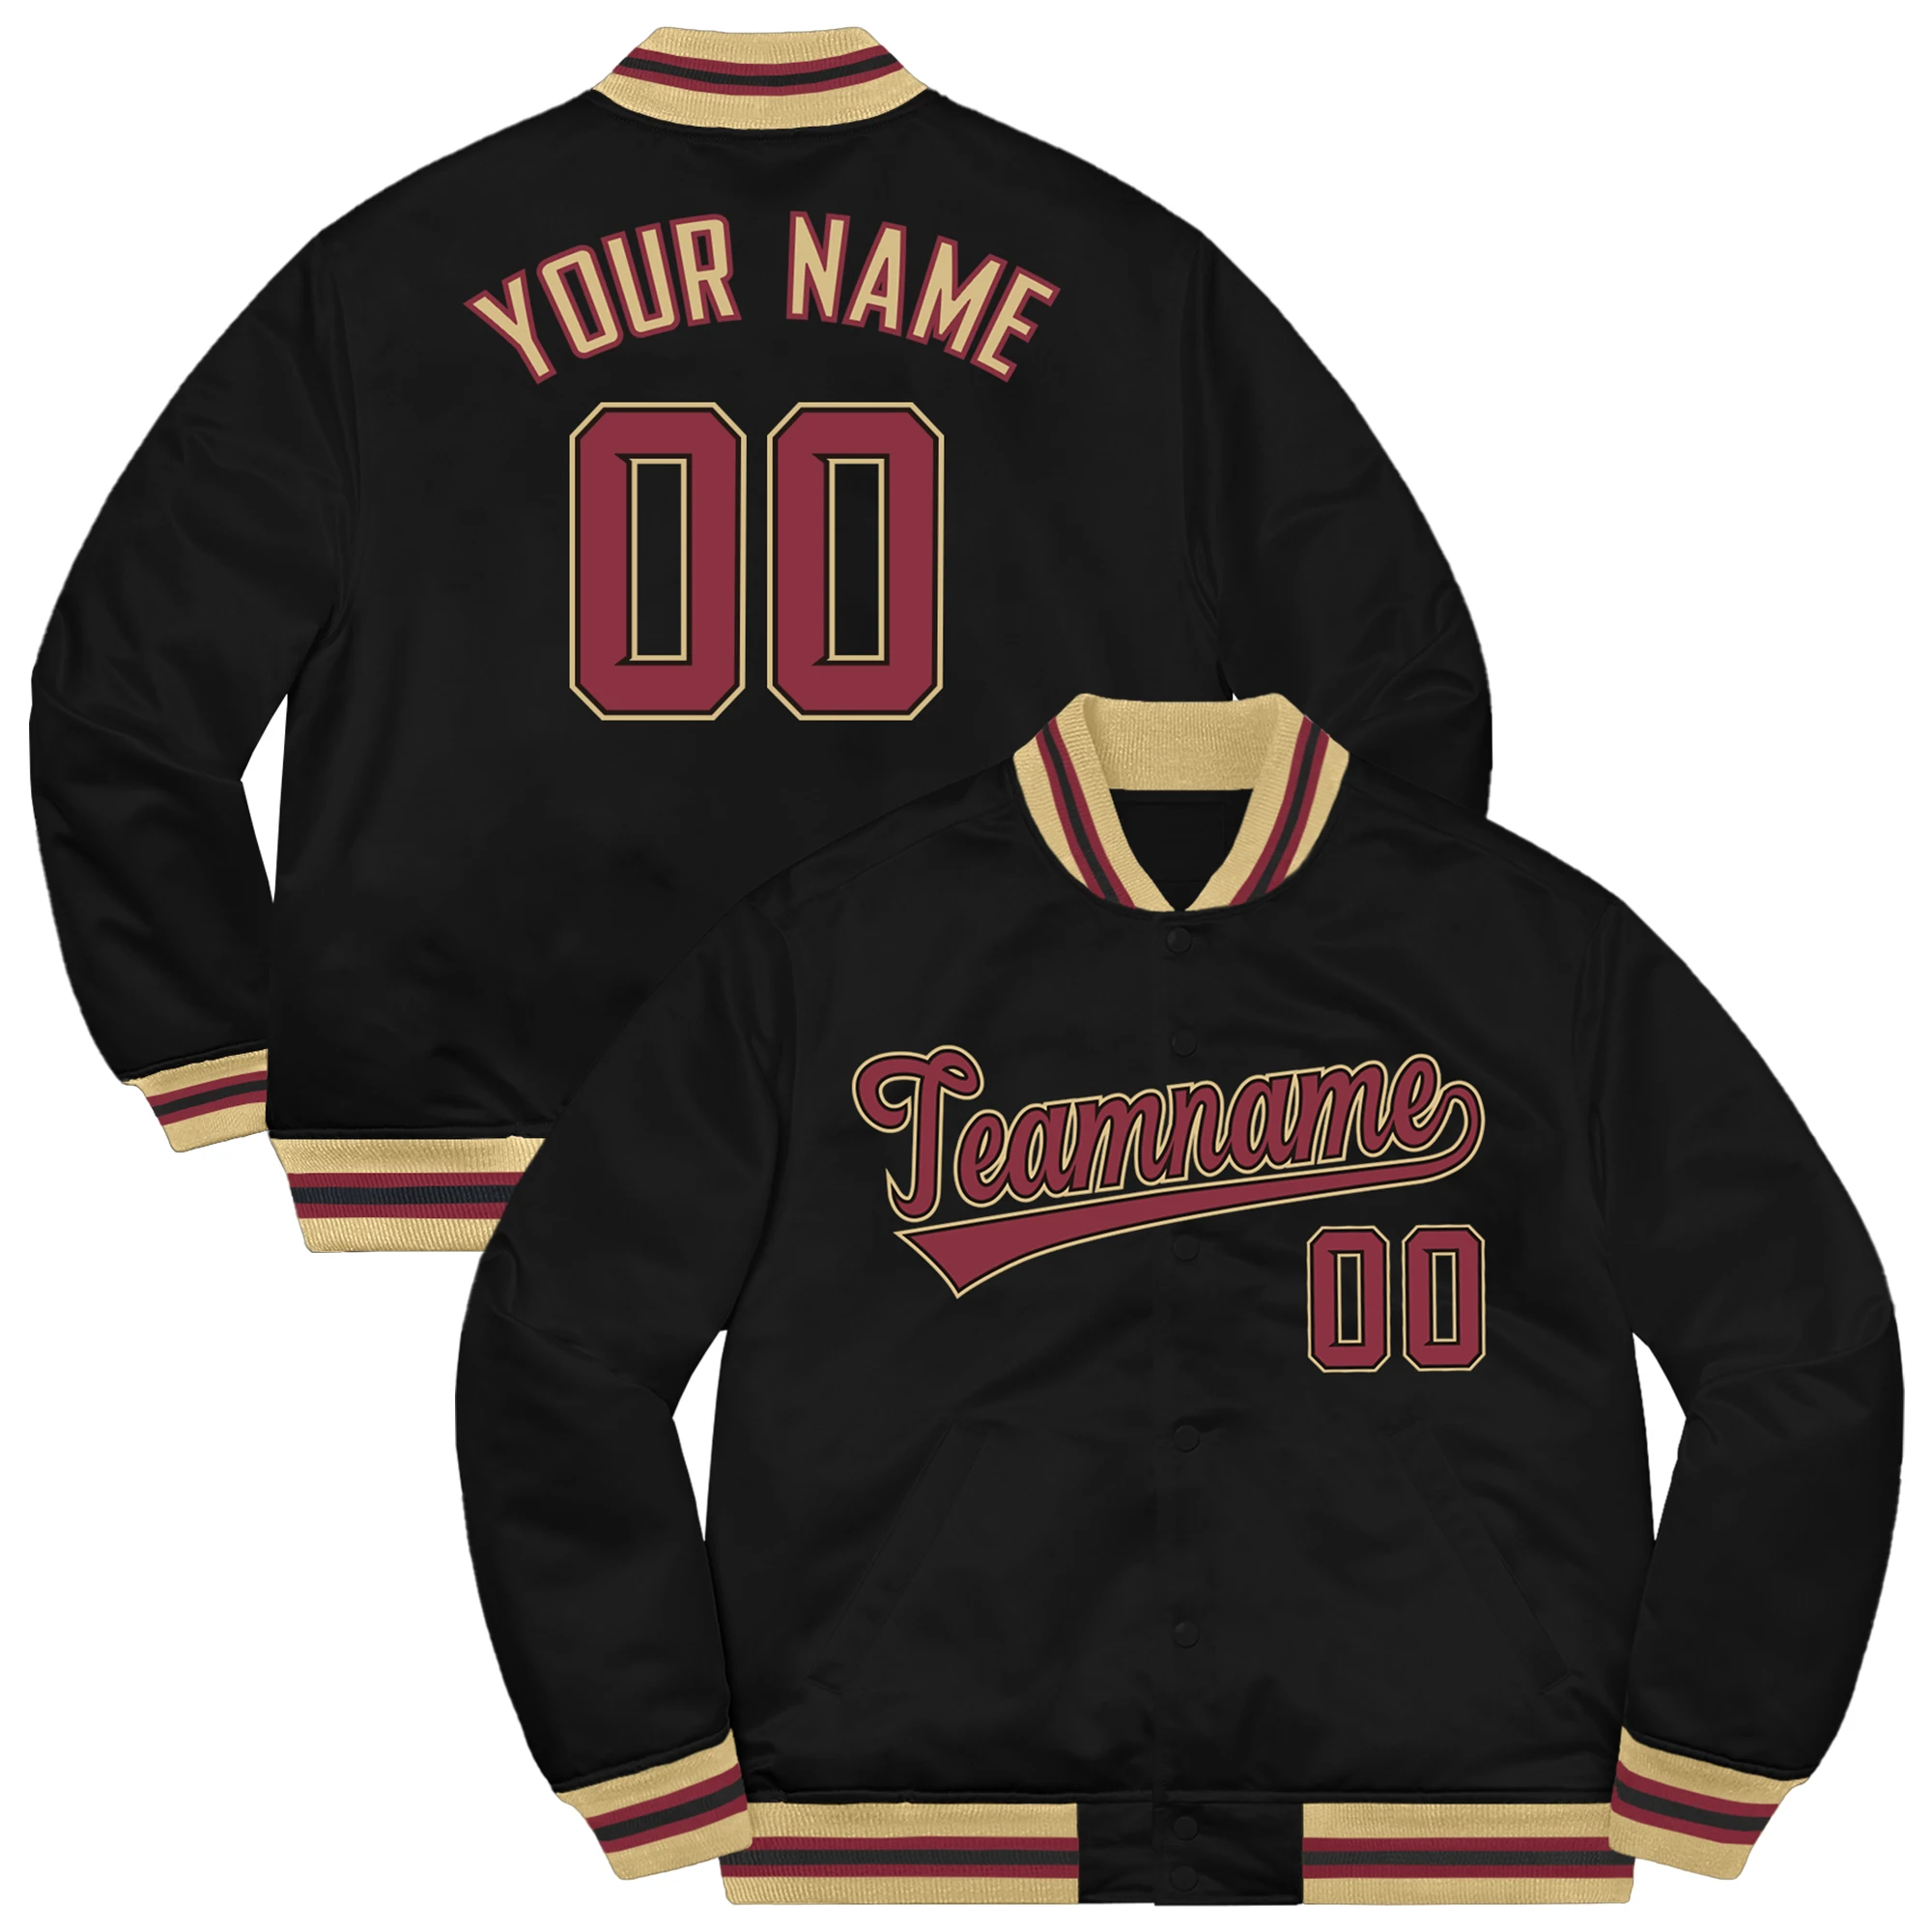 Personalized Custom Baseball Jacket Thin Coat Embroidered Stitched Team Name Number Fashion Bomber Jacket College Sweatshirt Men